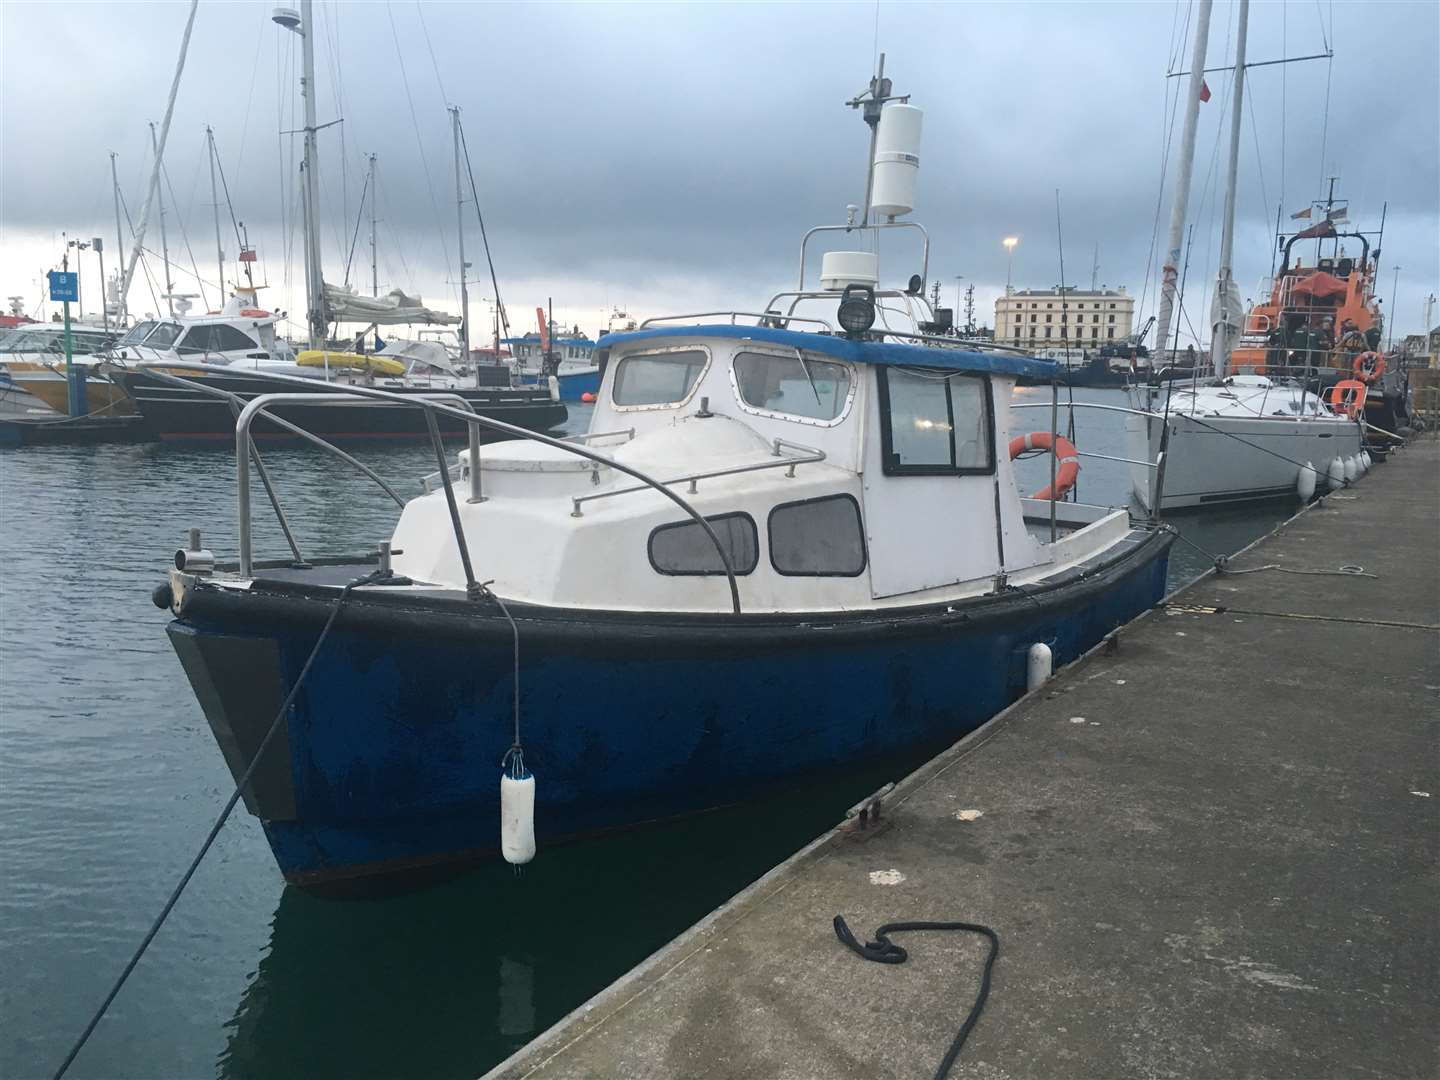 Fishing vessel suffered engine failure